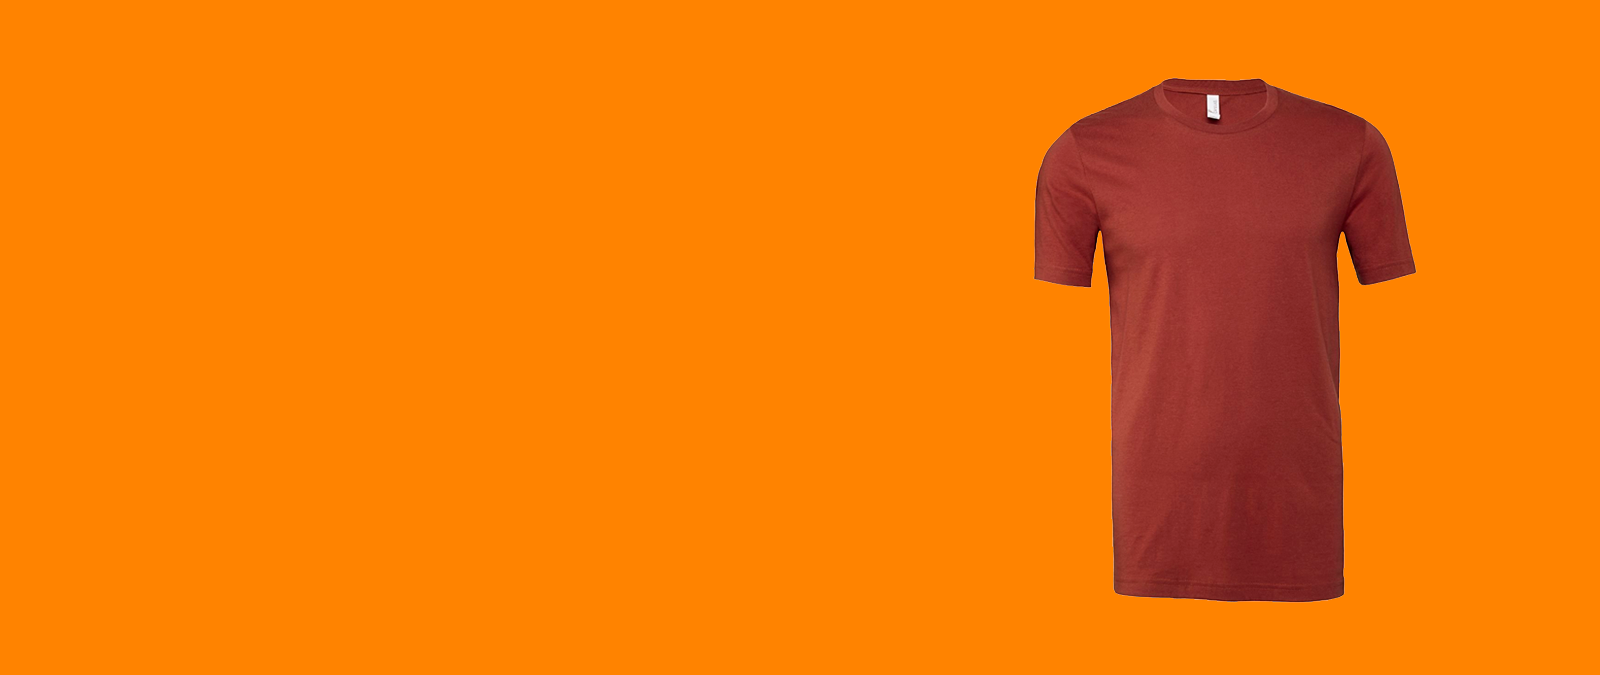 Plain red t-shirt displayed on an orange background.